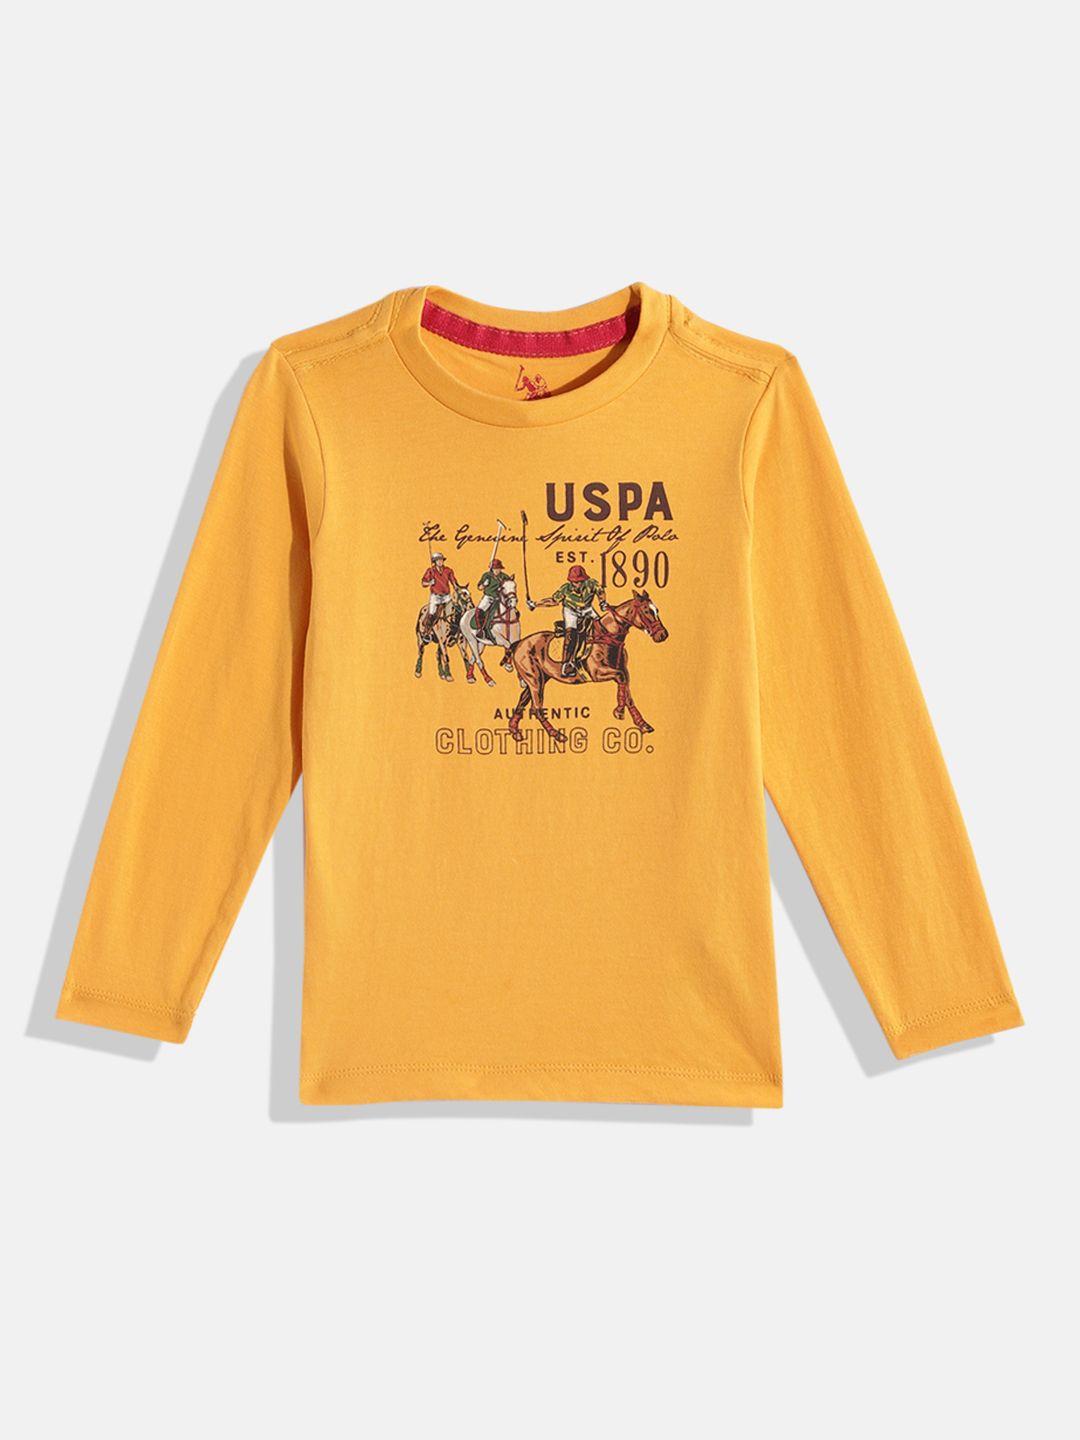 u.s. polo assn. kids boys yellow & brown brand logo printed pure cotton t-shirt